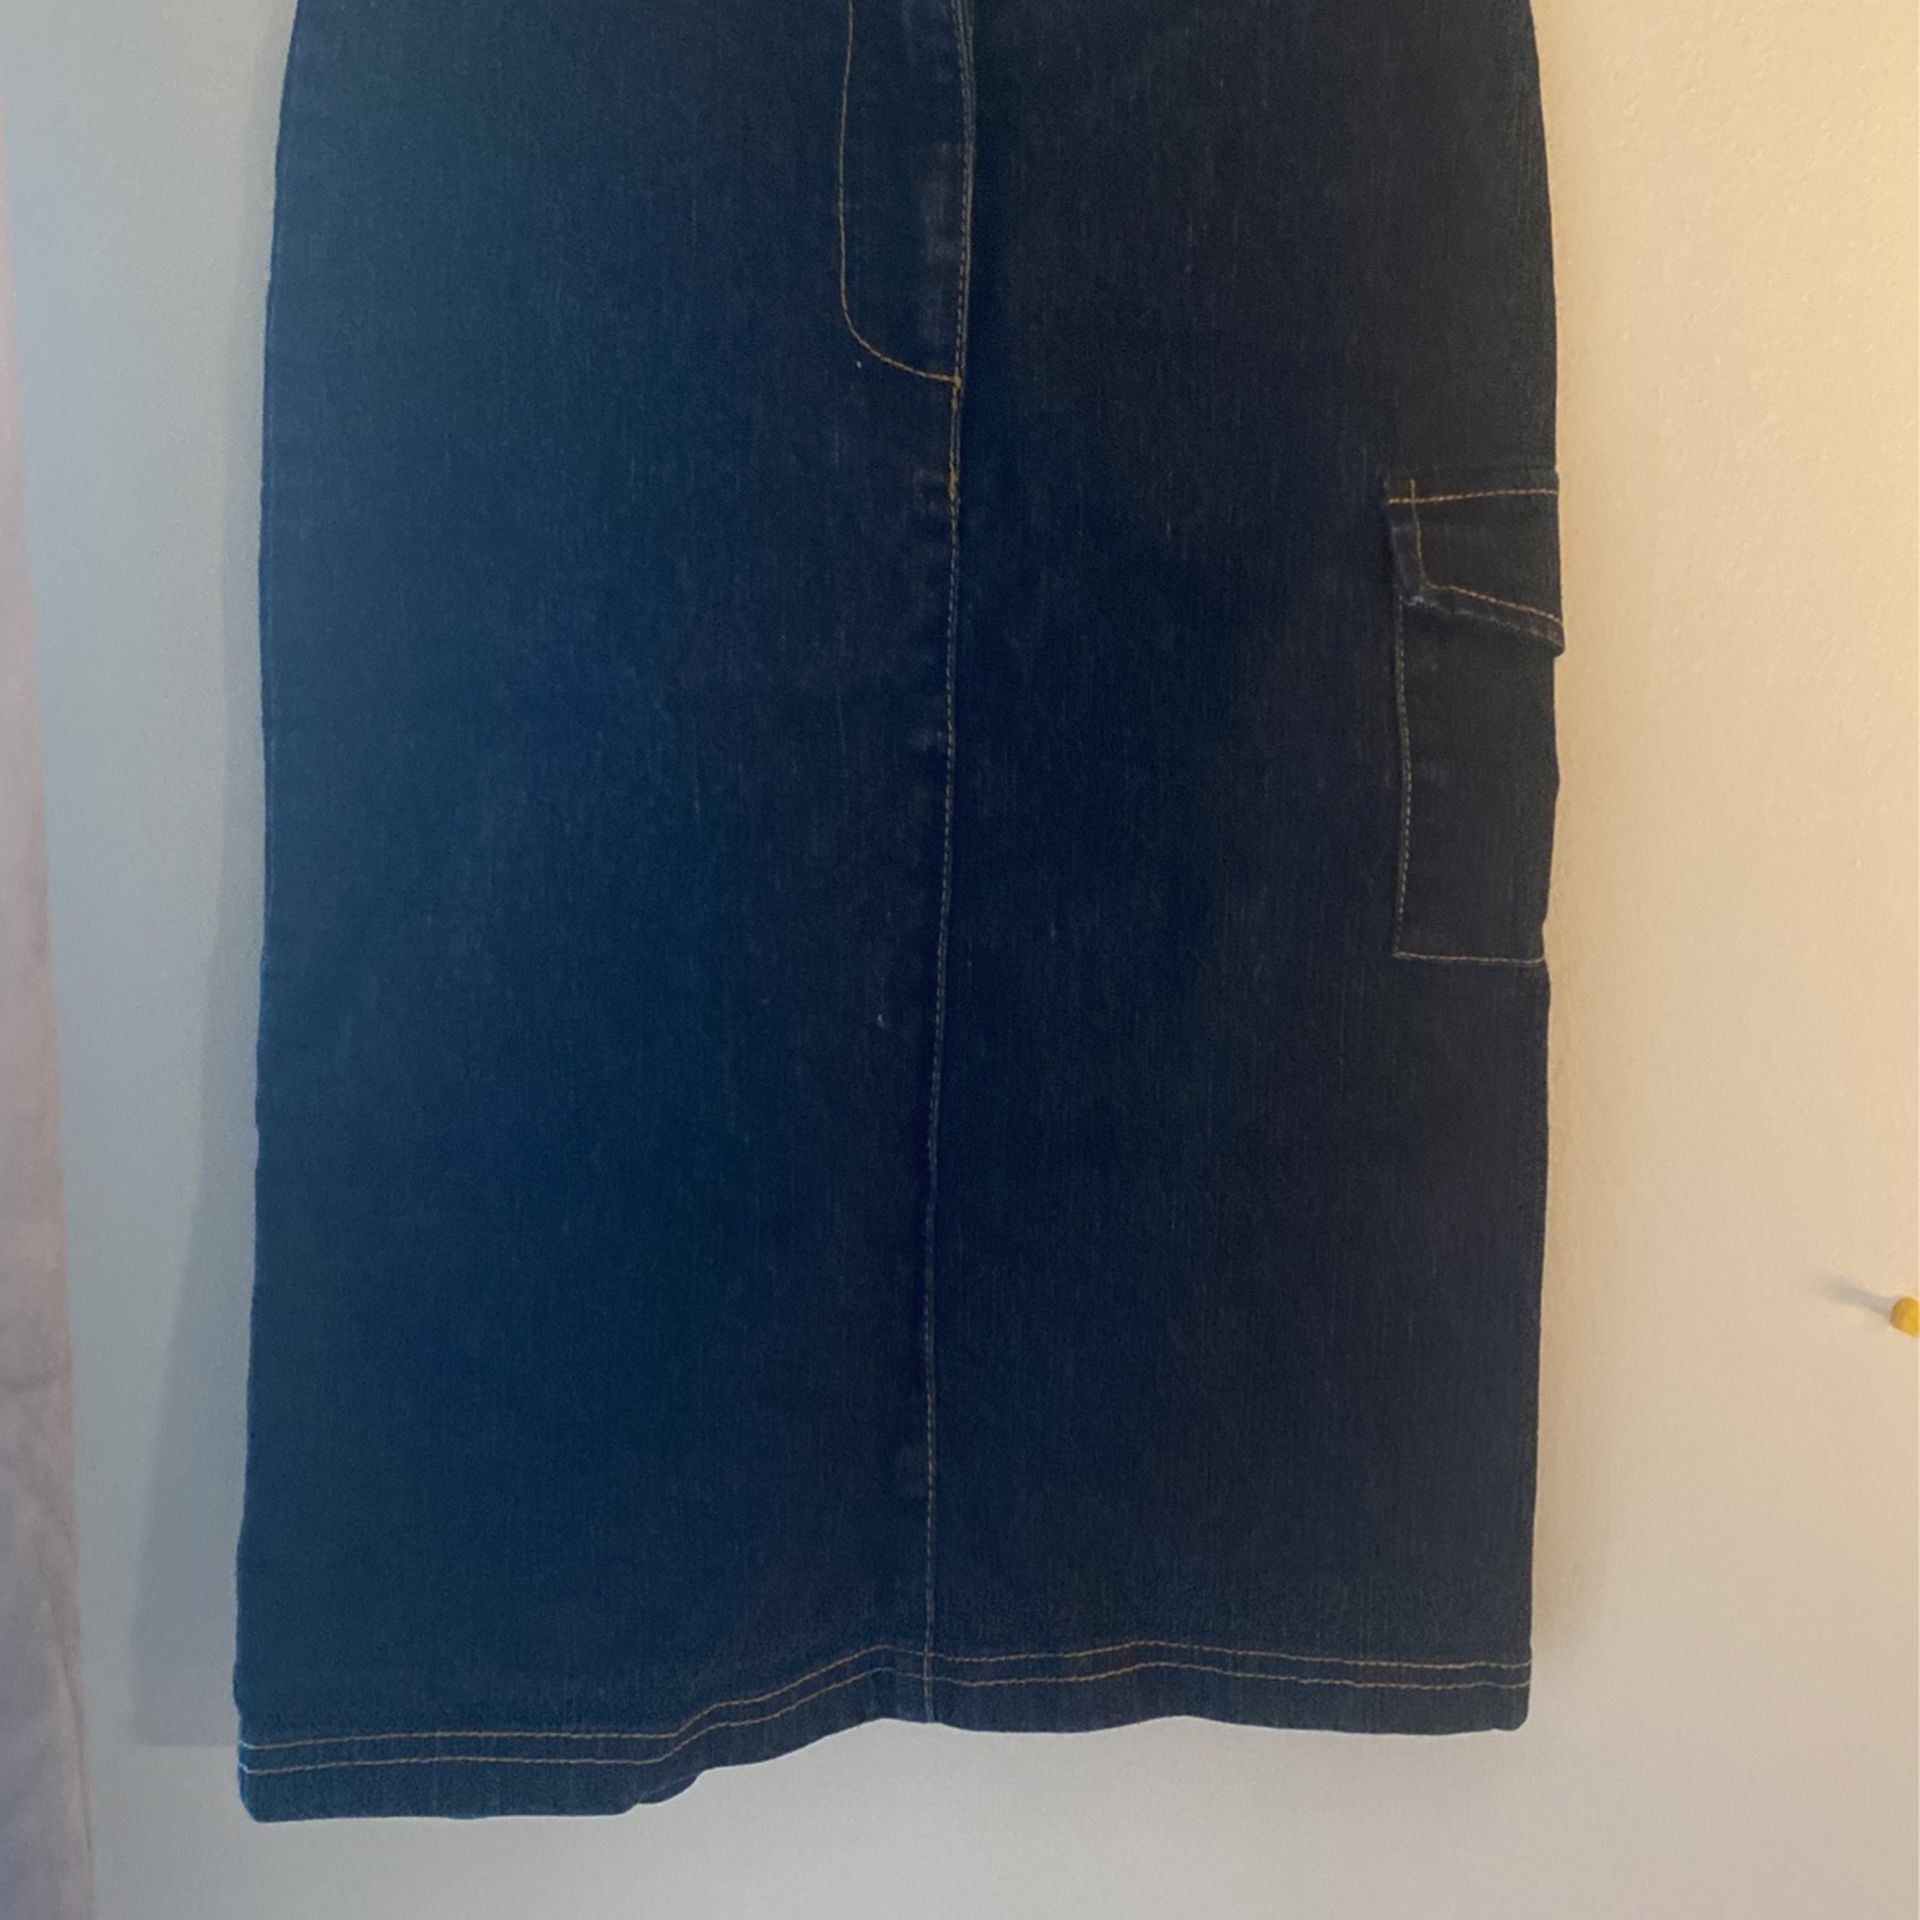 Jean Skirt Size 7/8